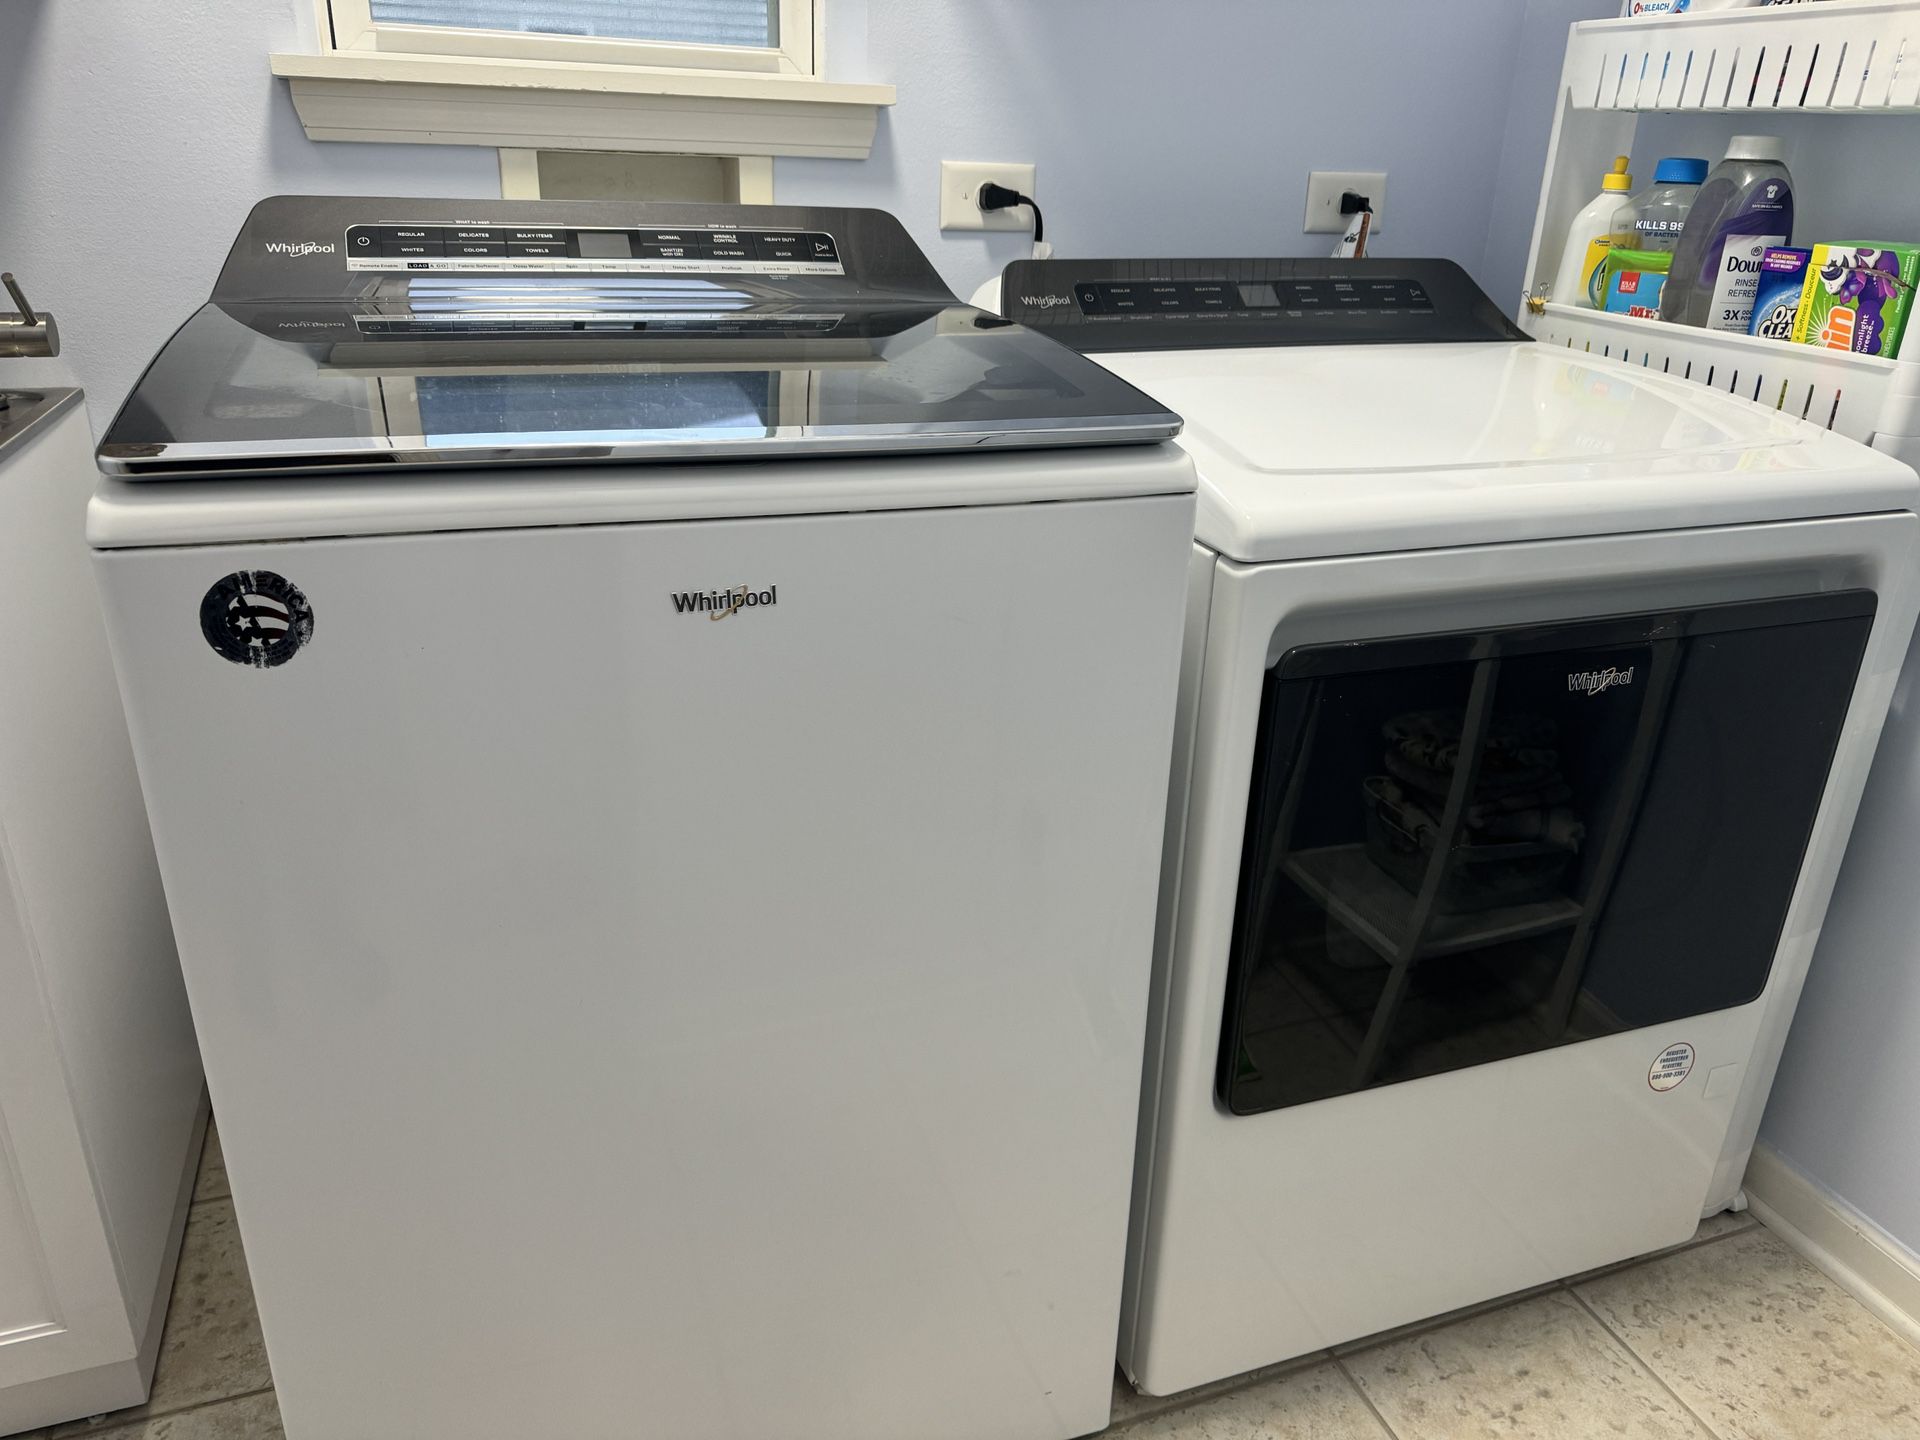 Whirlpool Washer Dryer Set, White, Gas Dryer $2300msrp